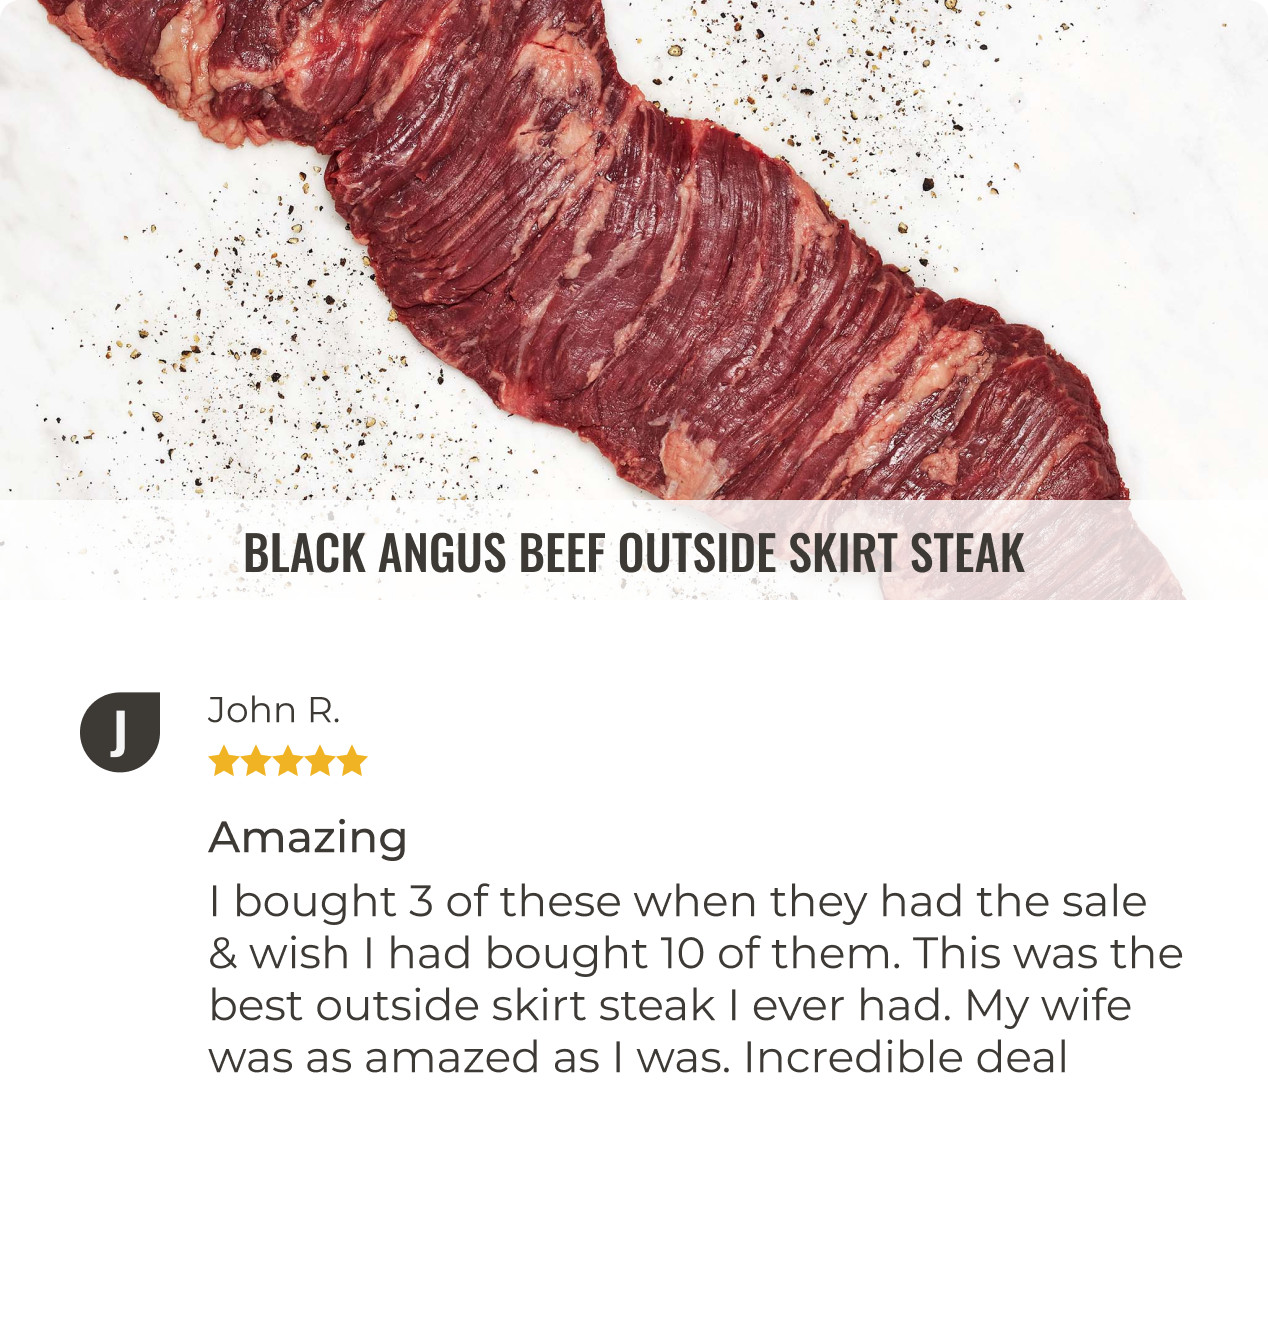 Black Angus Beef Outside Skirt Steak Review